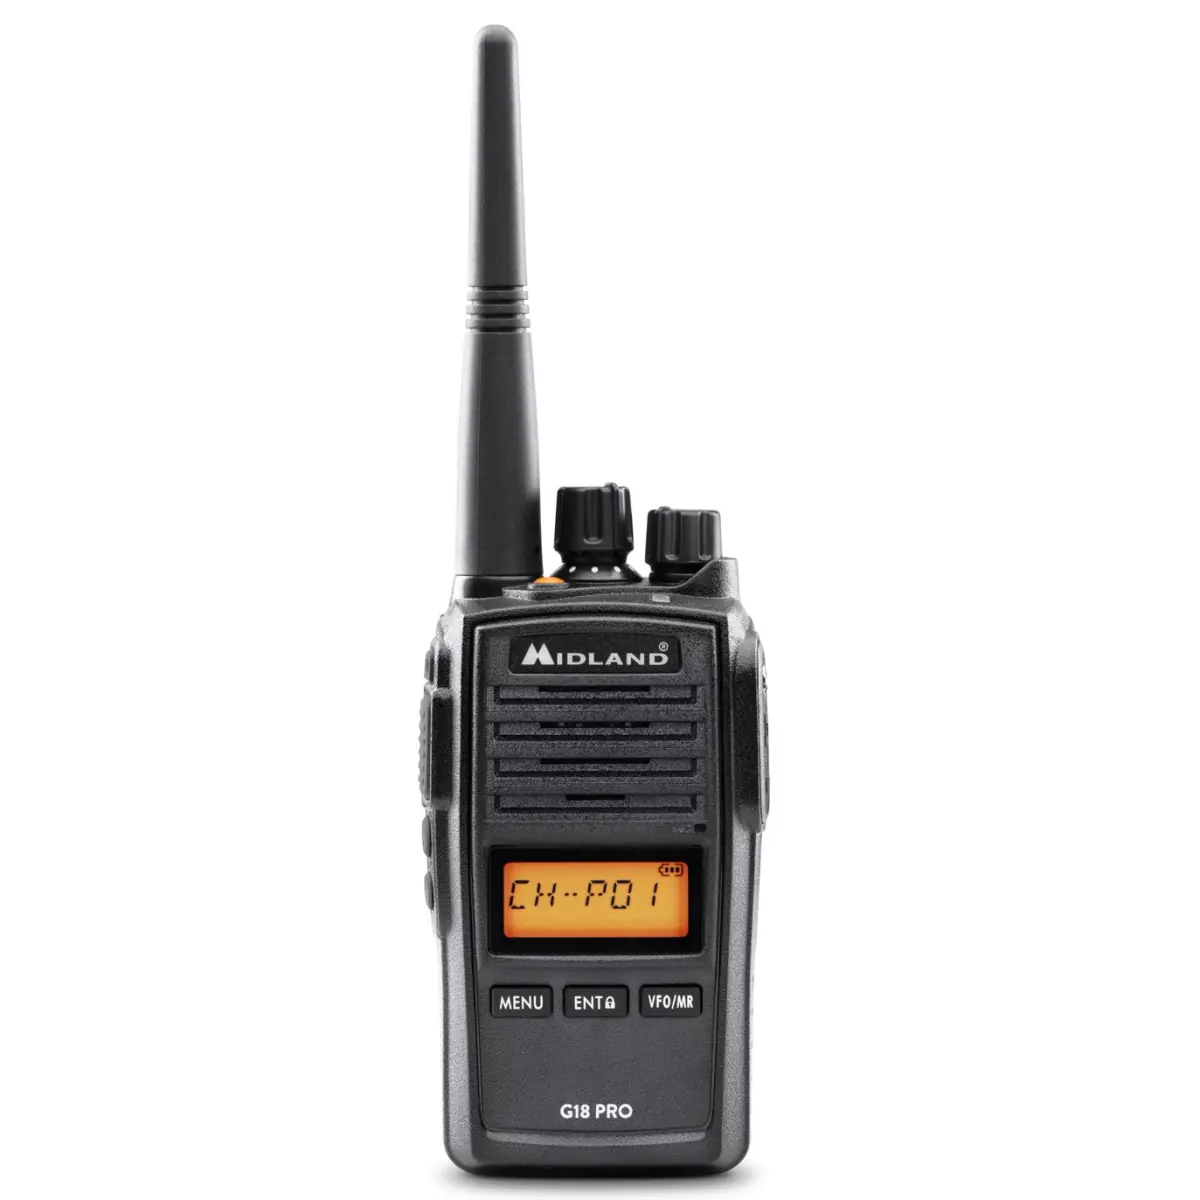  Pack de 4 Midland G18 Pro + Mallette de transport - Talkie walkie sans licence